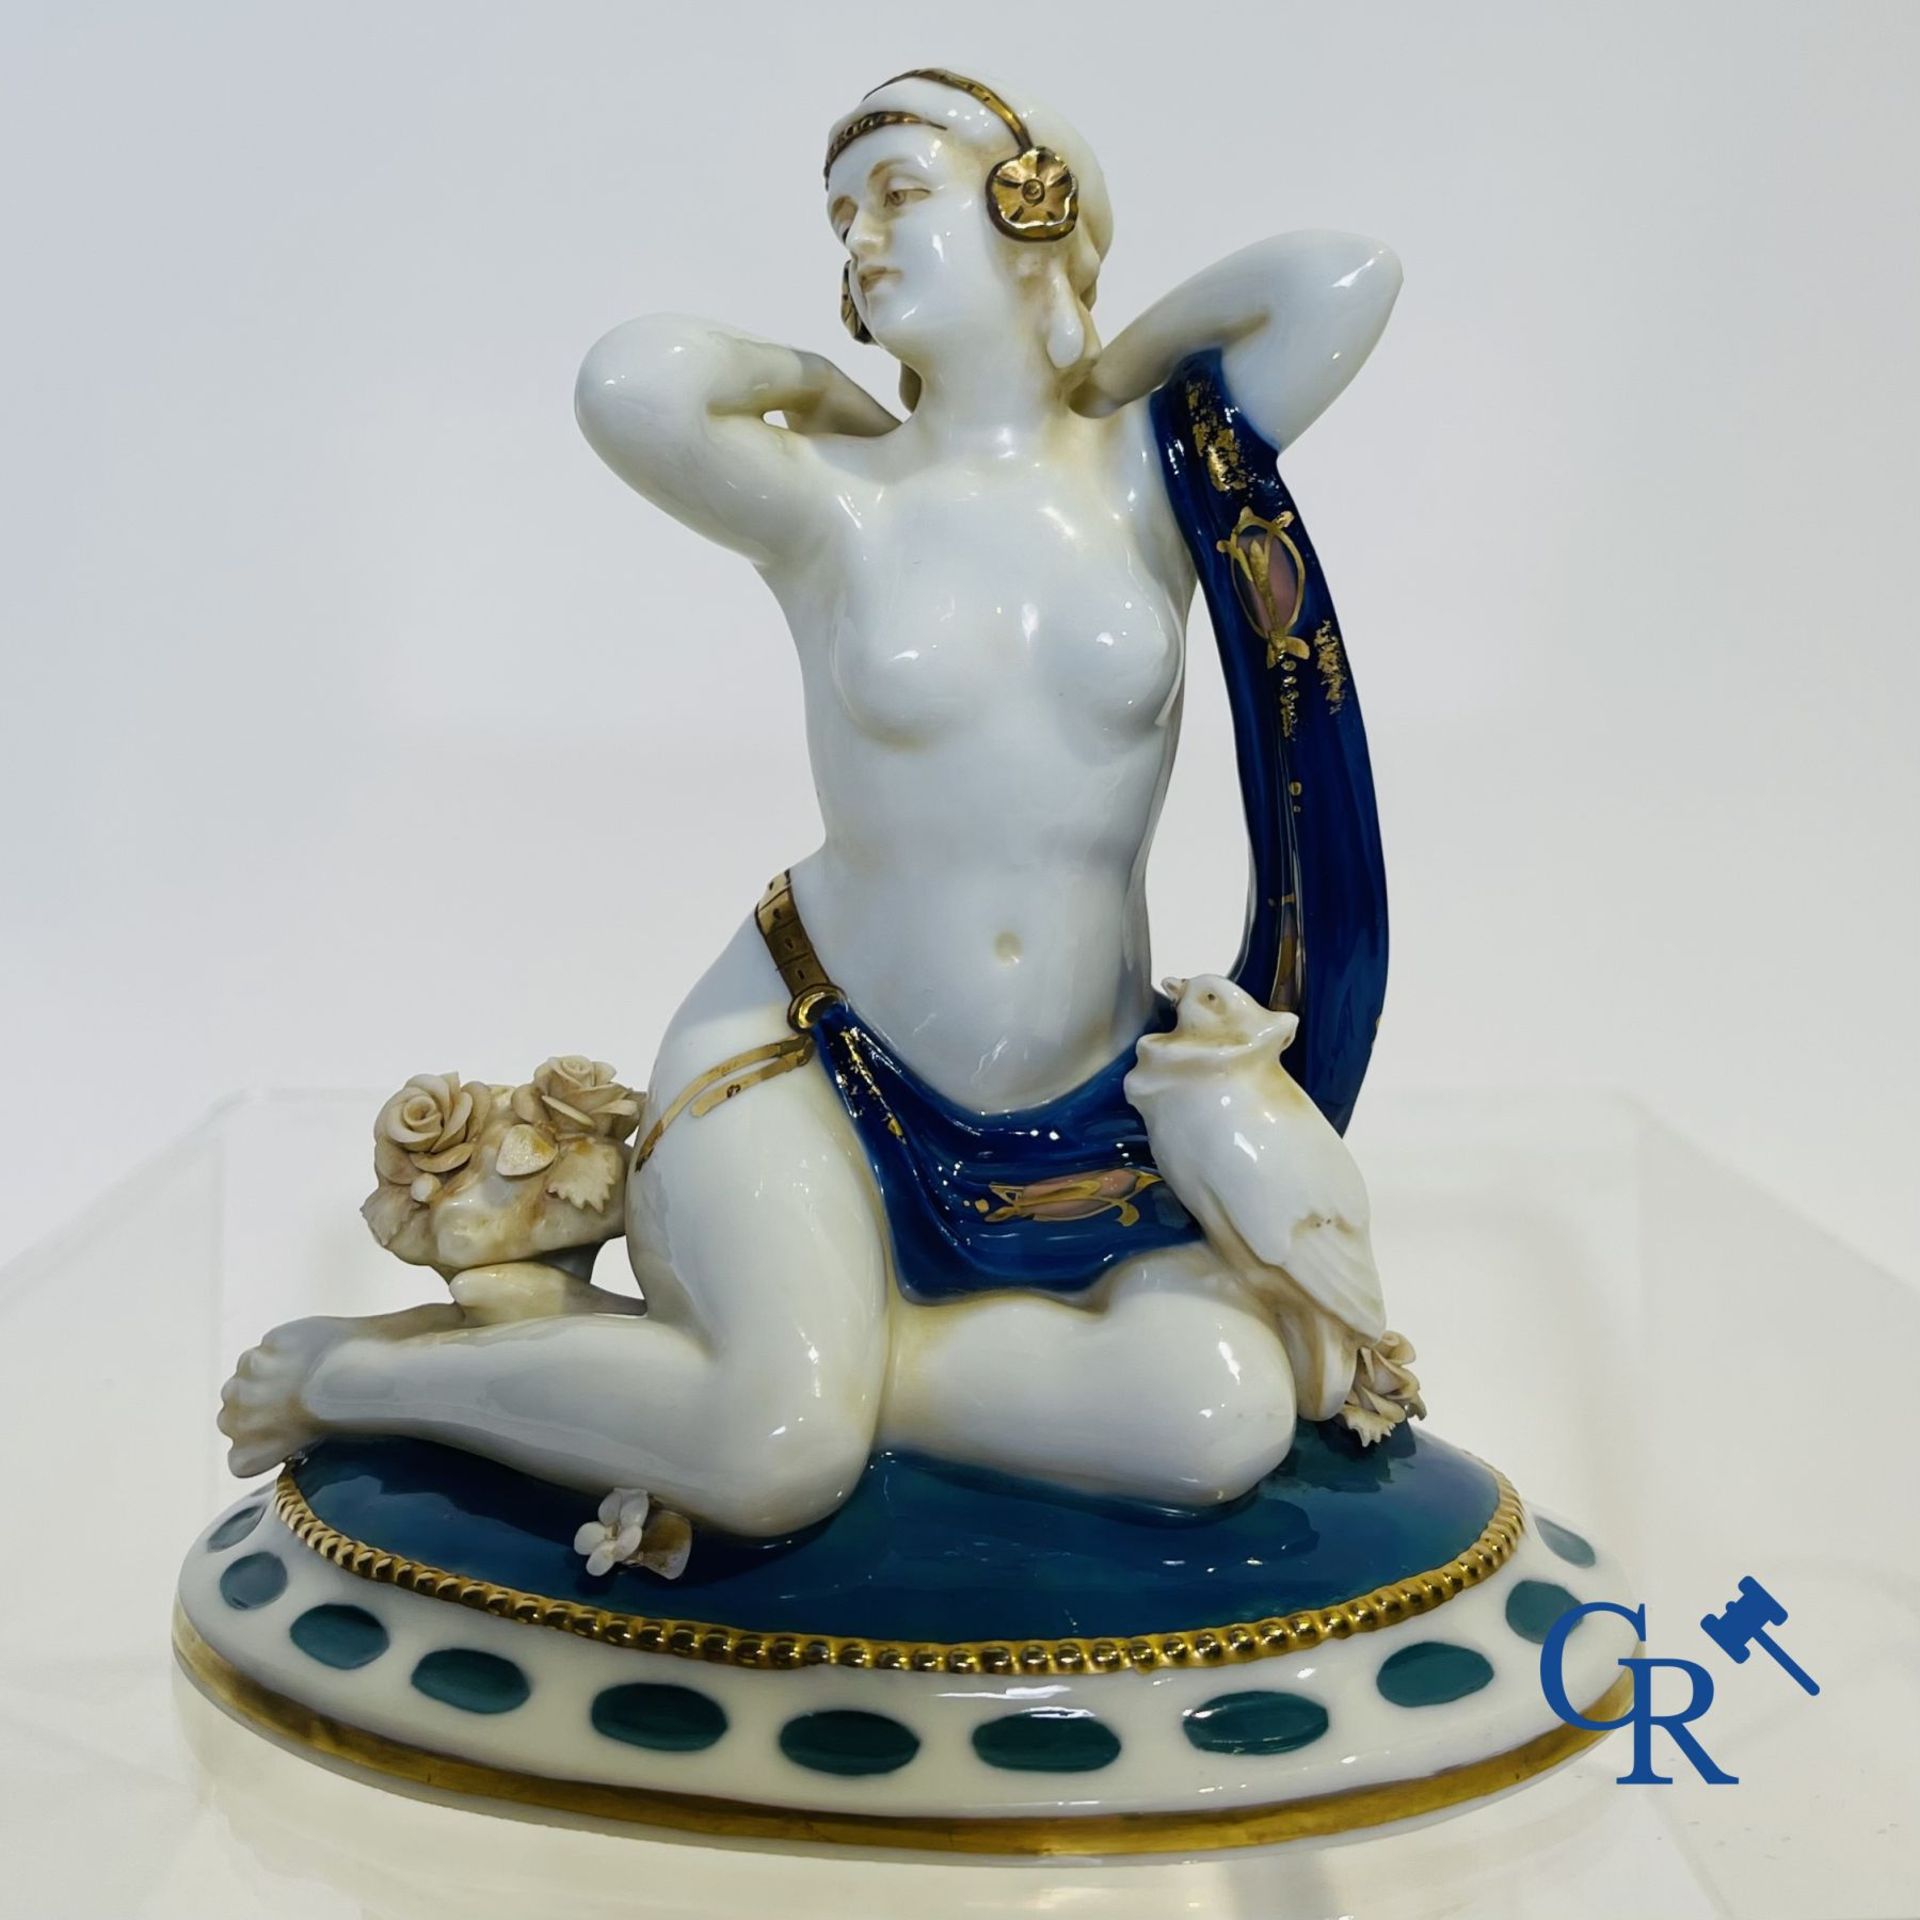 Art deco: An art deco sculpture in finely marked porcelain. - Bild 2 aus 9